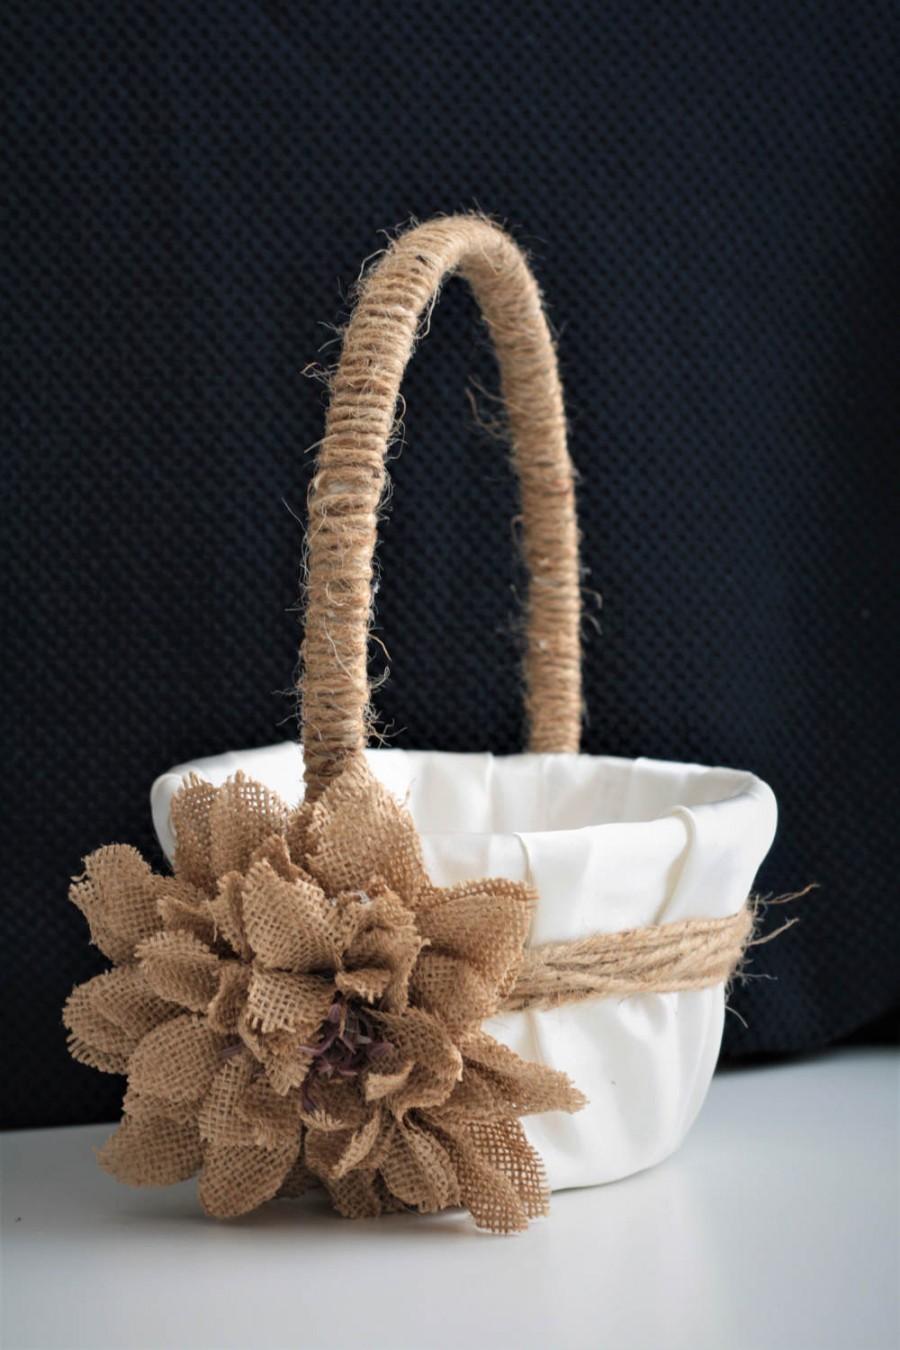 Wedding - Rustic Wedding Basket / Rustic Flower Girl Basket / Shabby Chic Basket / Burlap Wedding Basket Pillow Set / Rustic Ring Bearer Pillow - $37.00 USD